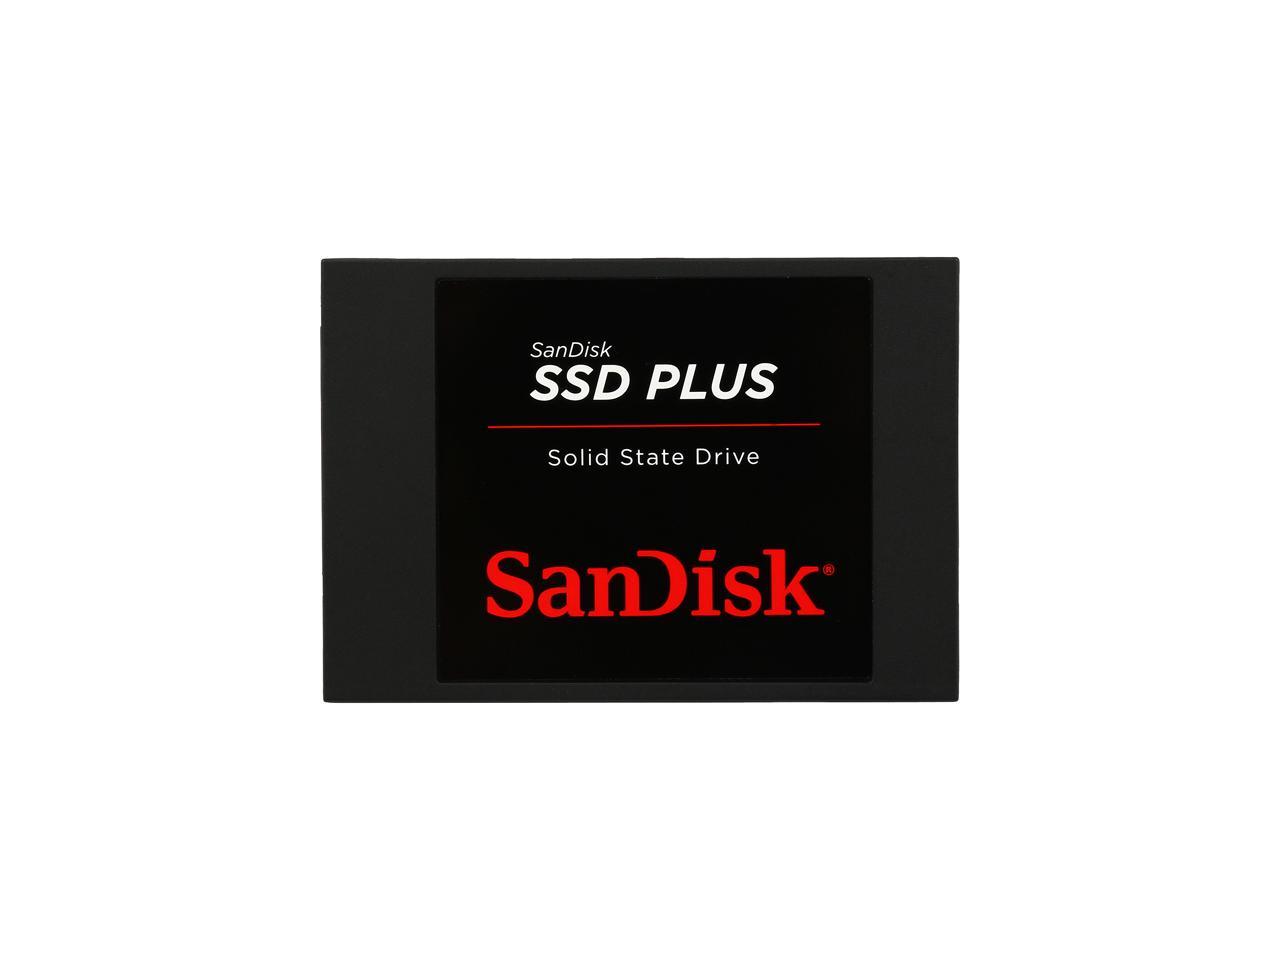 SanDisk SSD Plus 120GB Internal SSD - SATA III 6Gb/s, 2.5"/7mm - SDSSDA-120G-G26